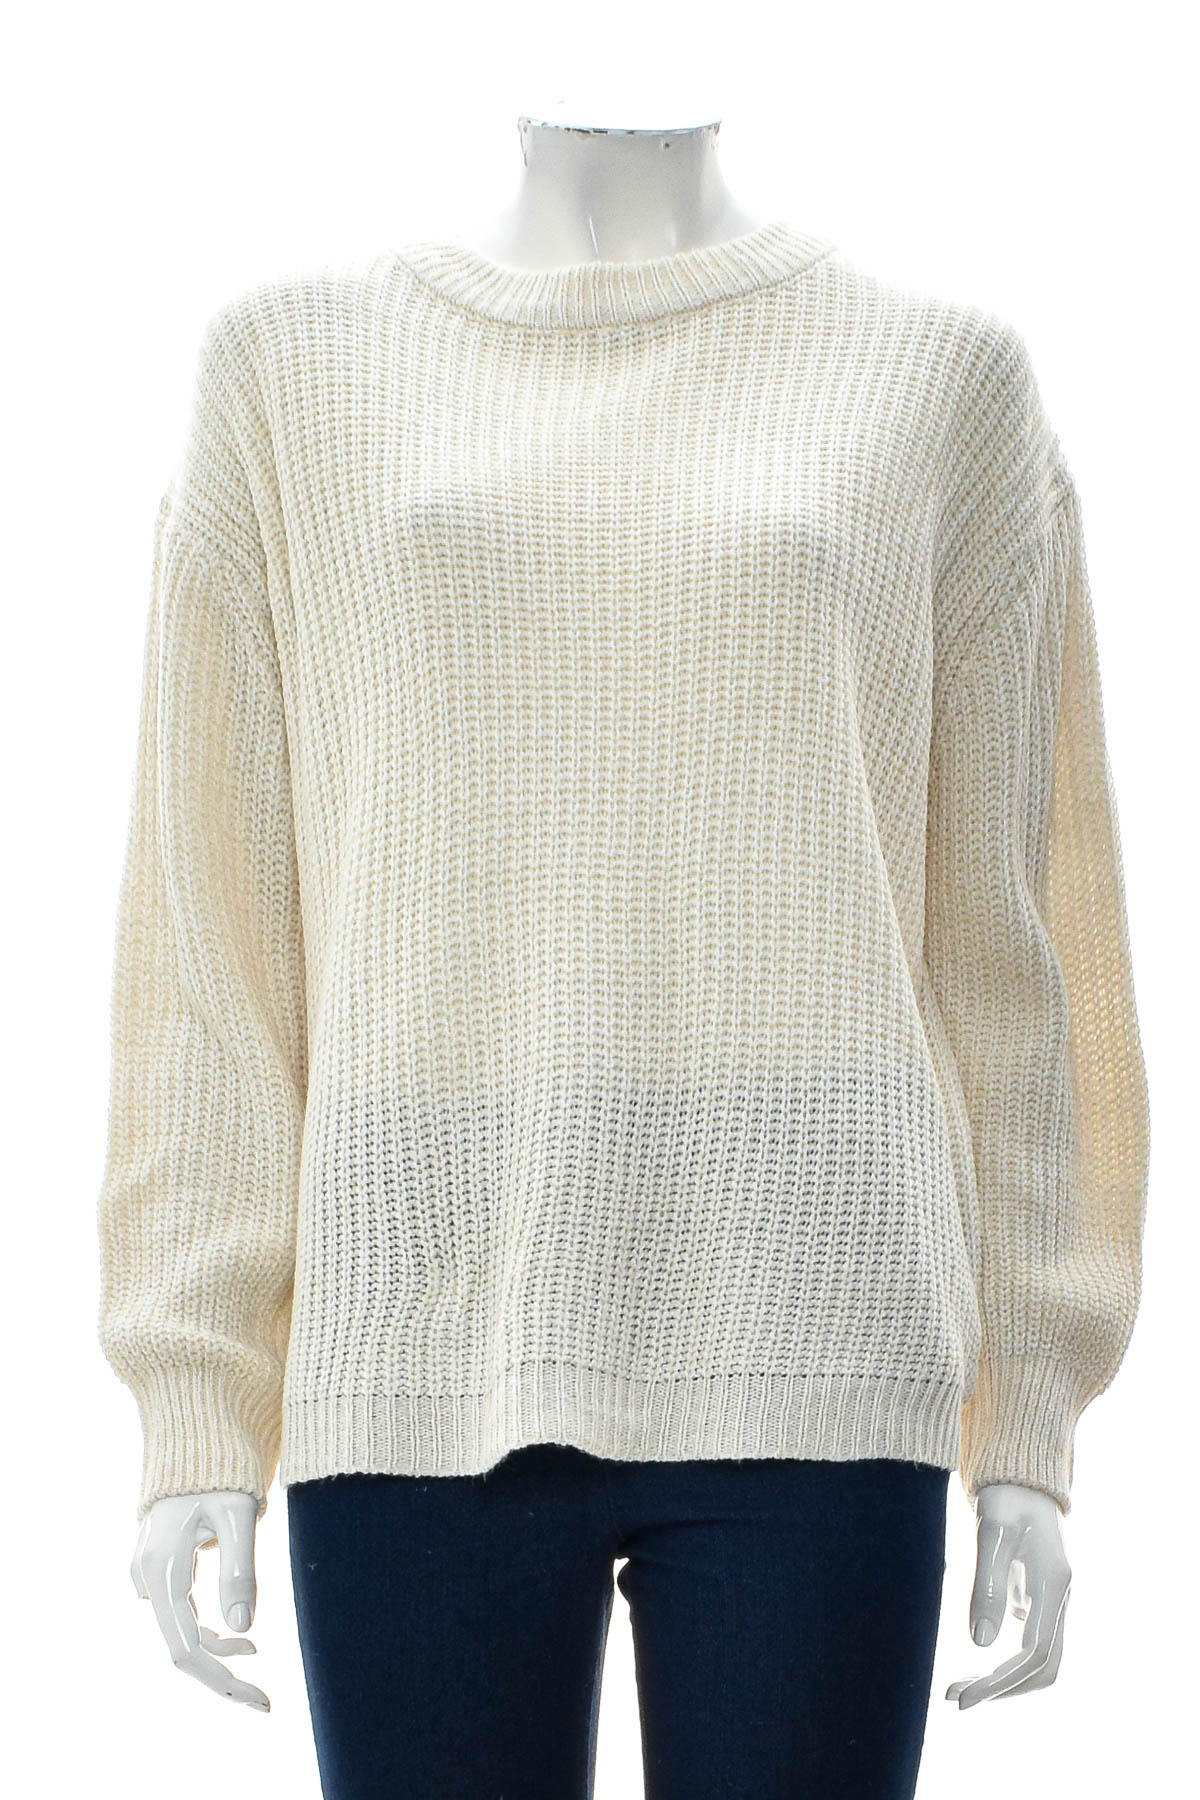 Women's sweater - anko - 0